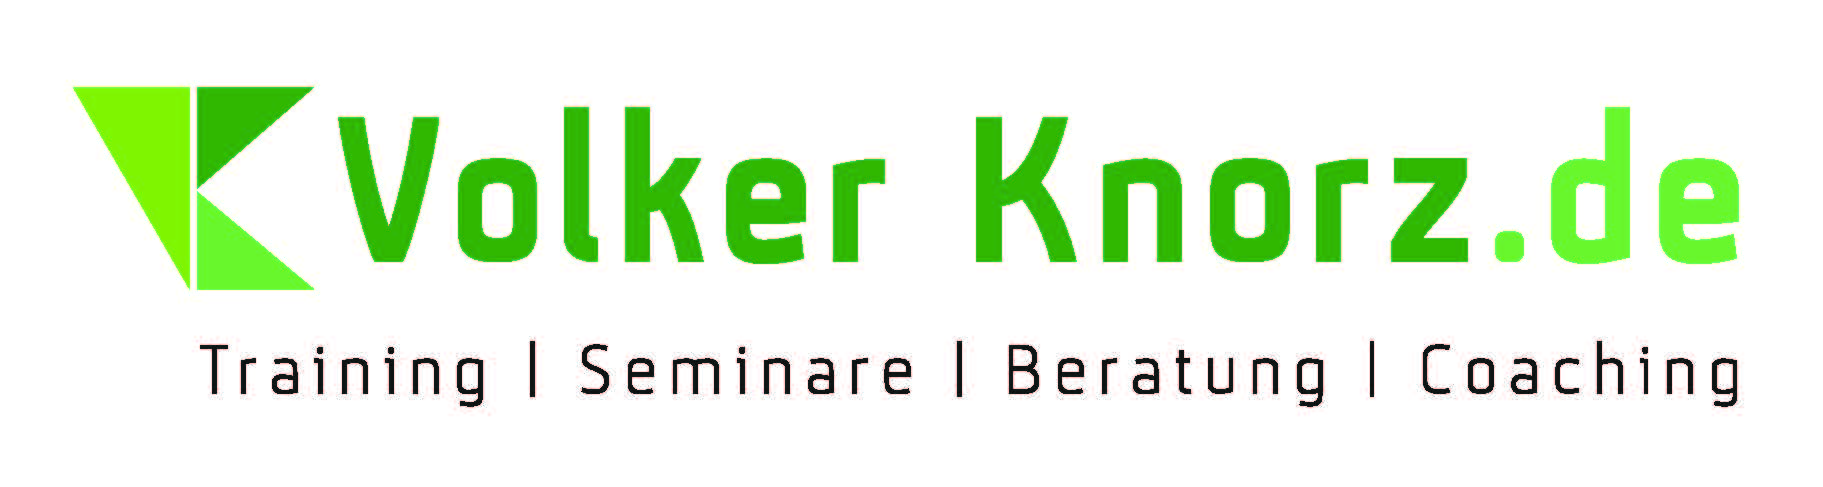 Volker Knorz Logo